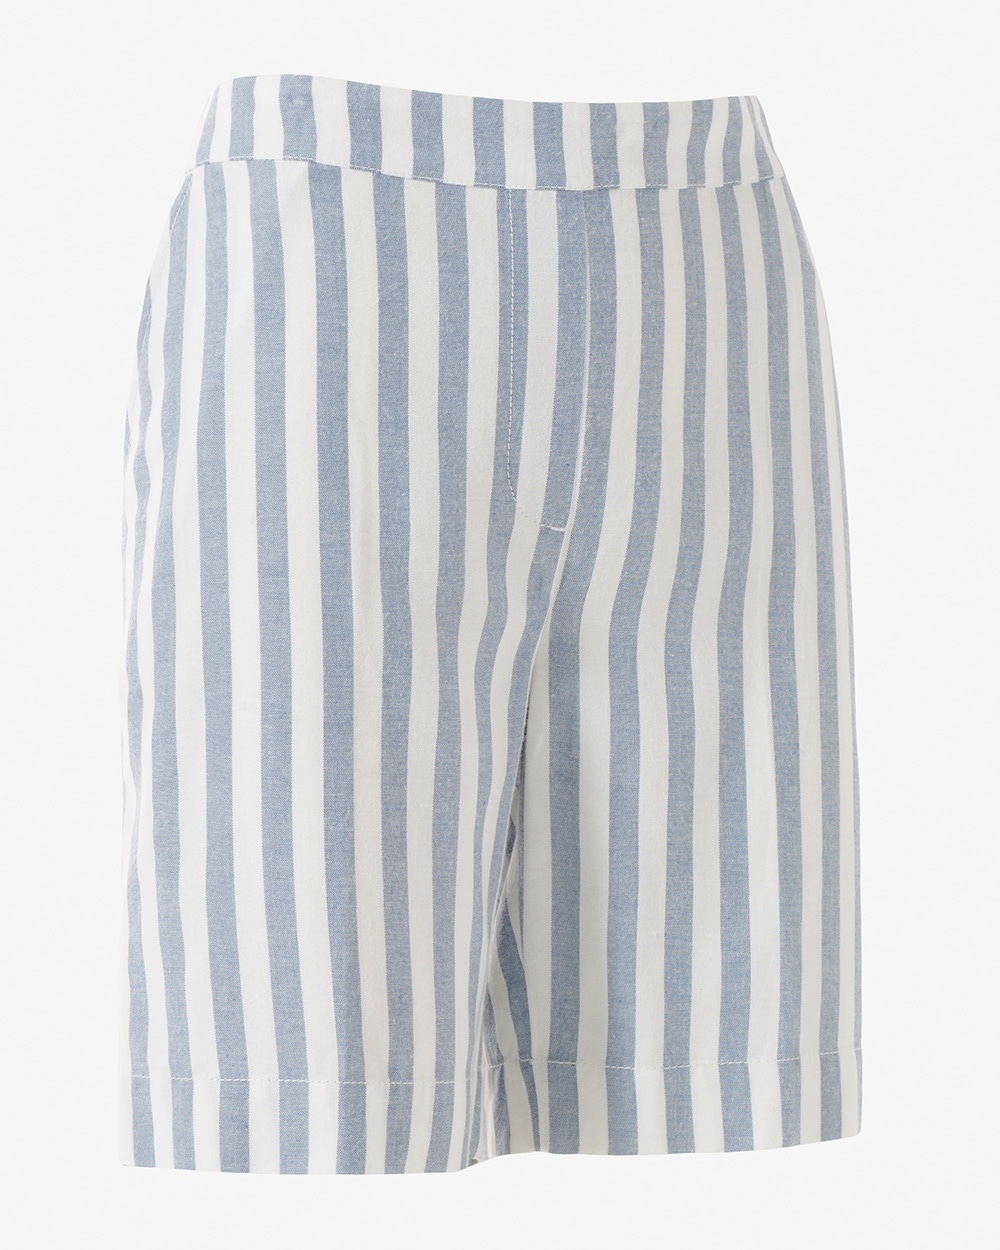 Chambray Stripe Pull-On Shorts